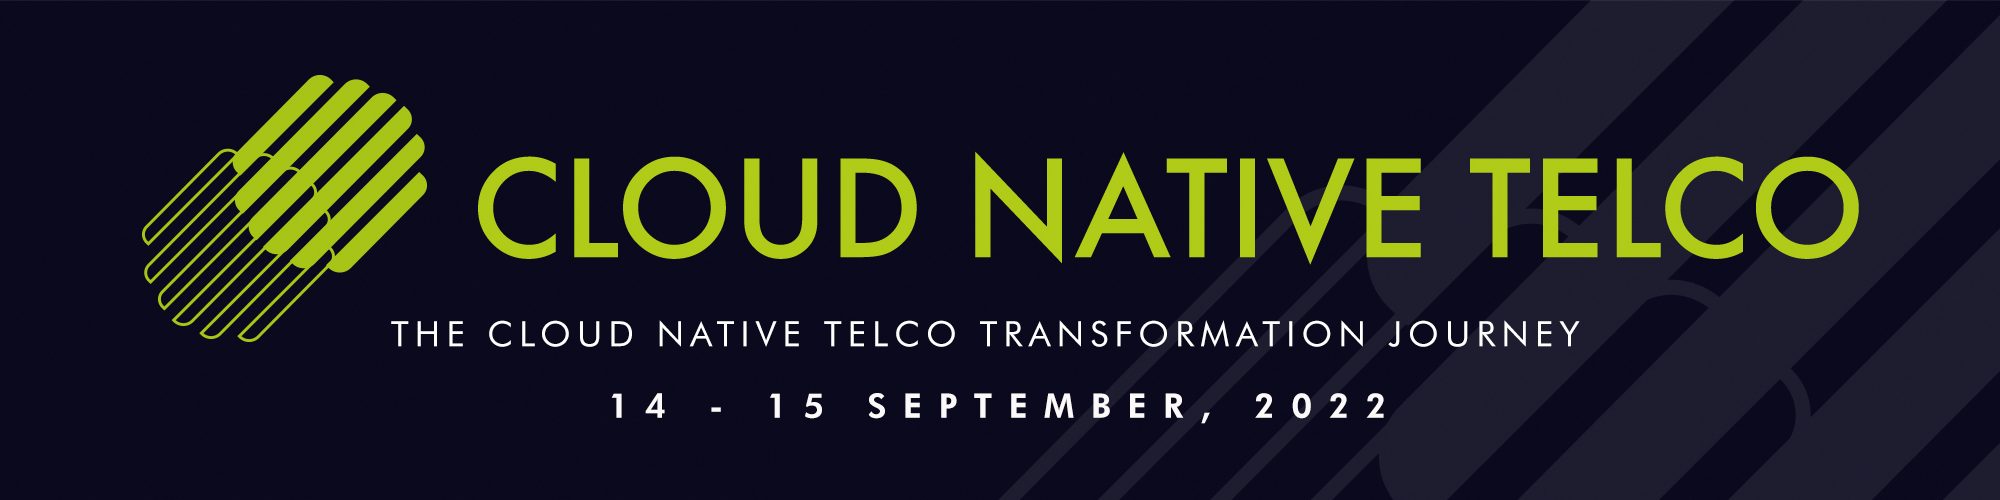 Cloud Native Telco